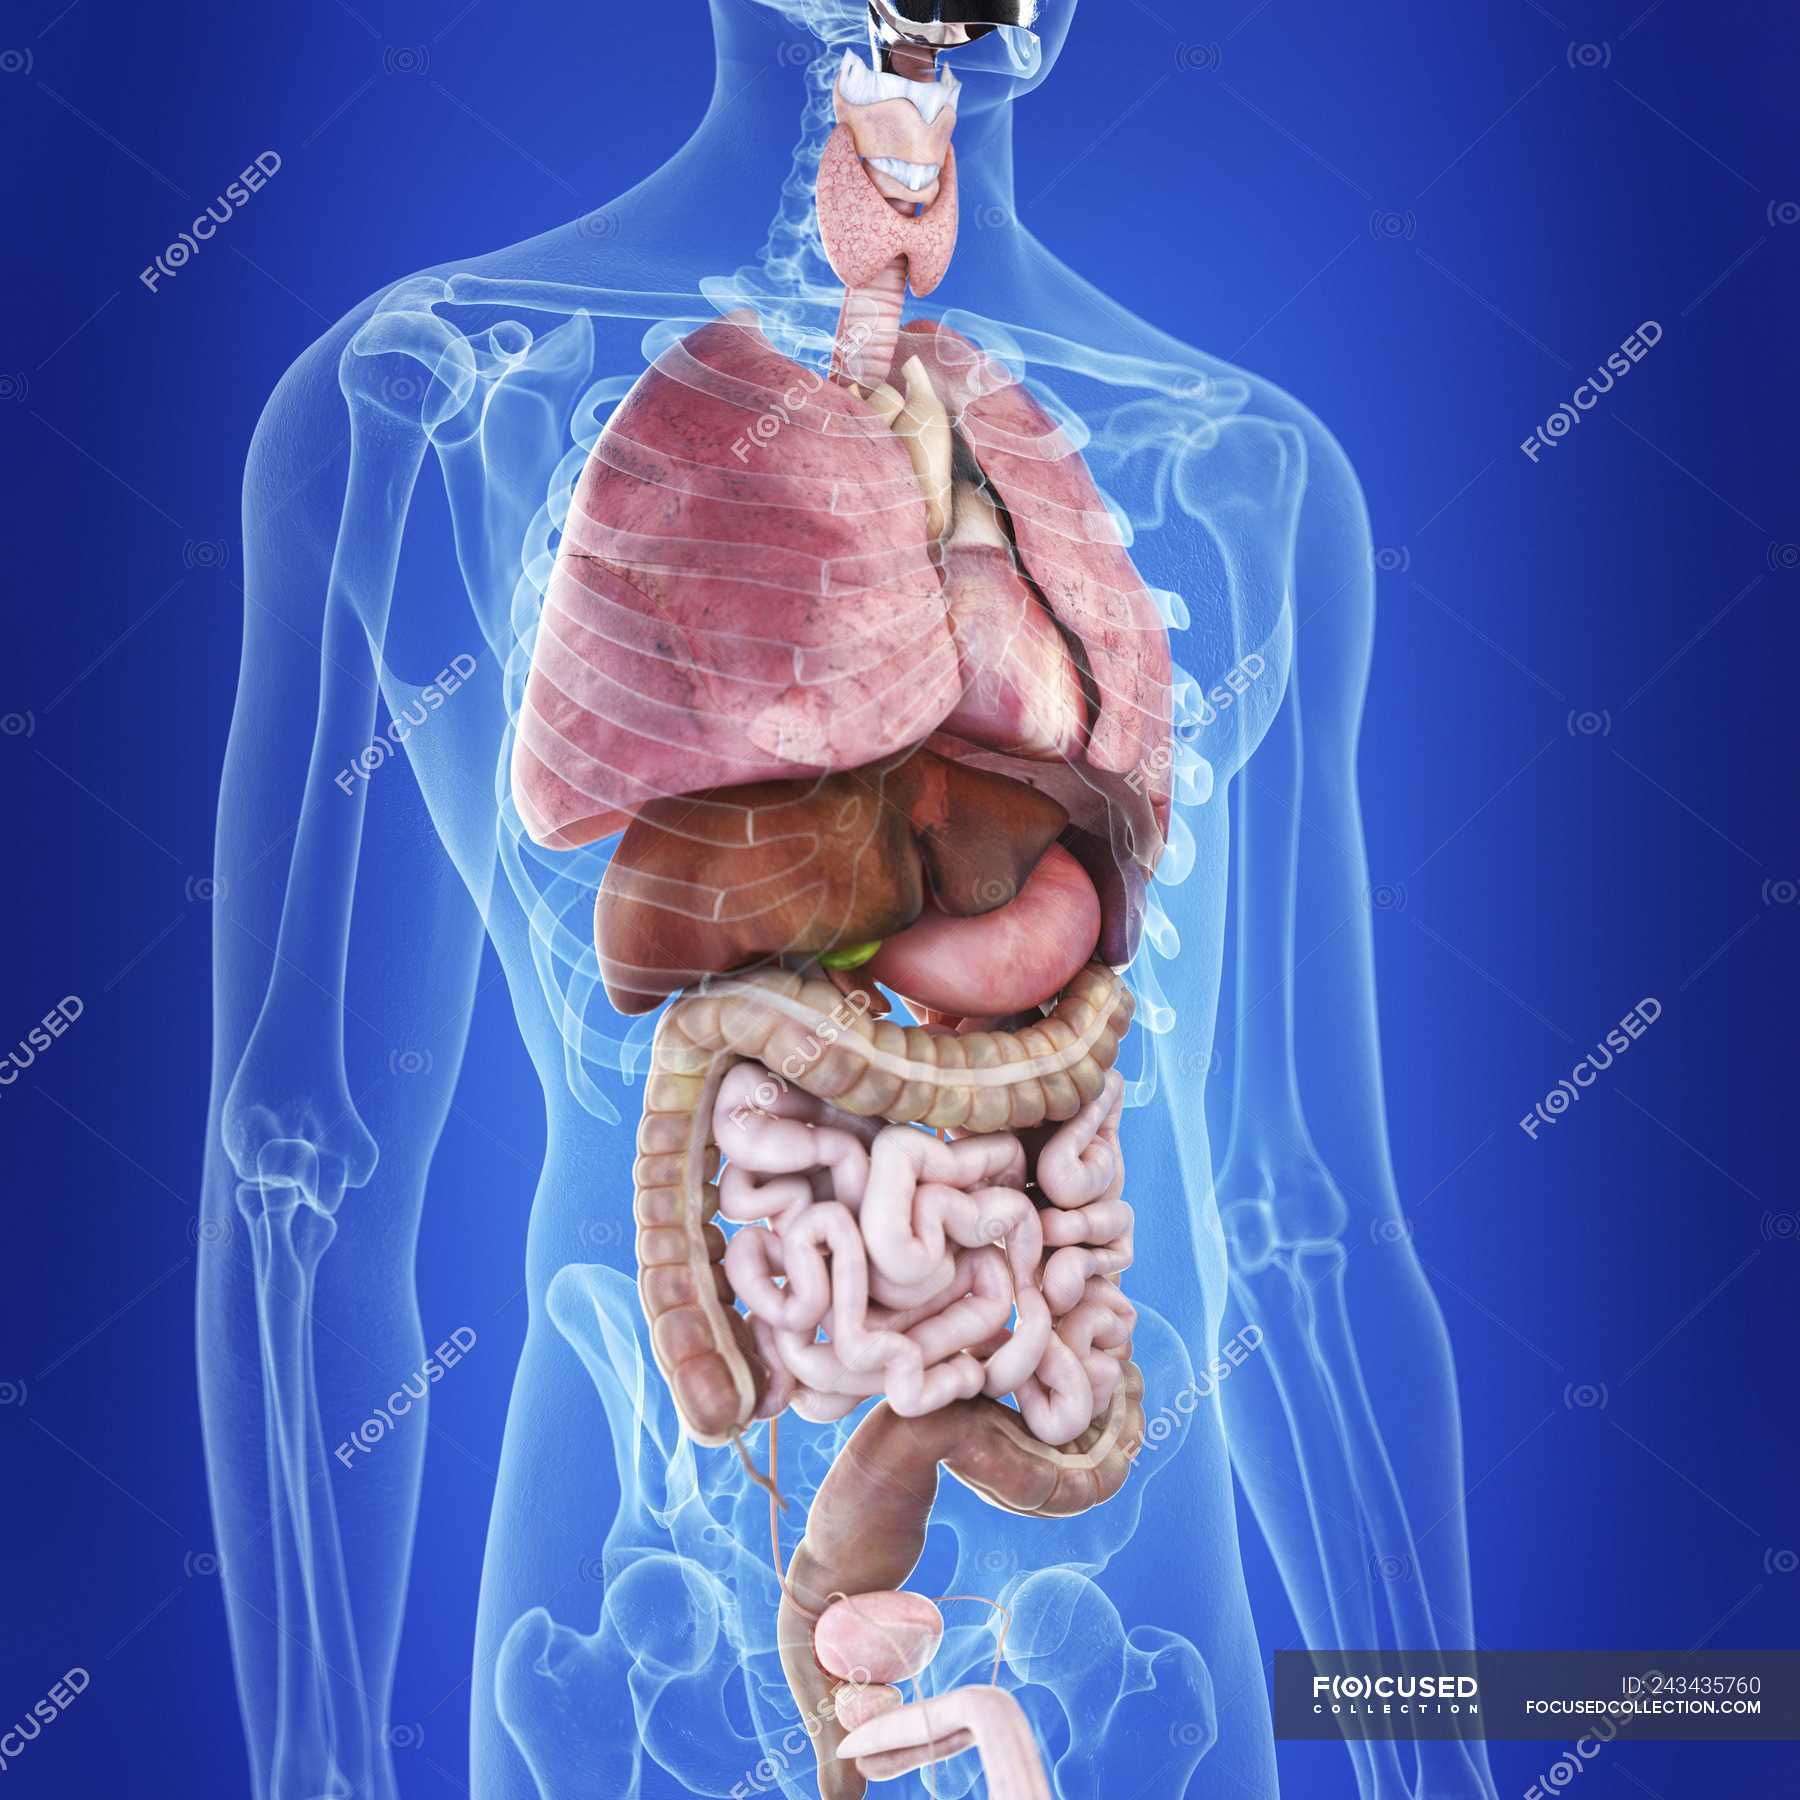 itme Jeneratör kalanlar  Illustration of human organs in body silhouette. — intestine, Digitally  Generated - Stock Photo | #243435760